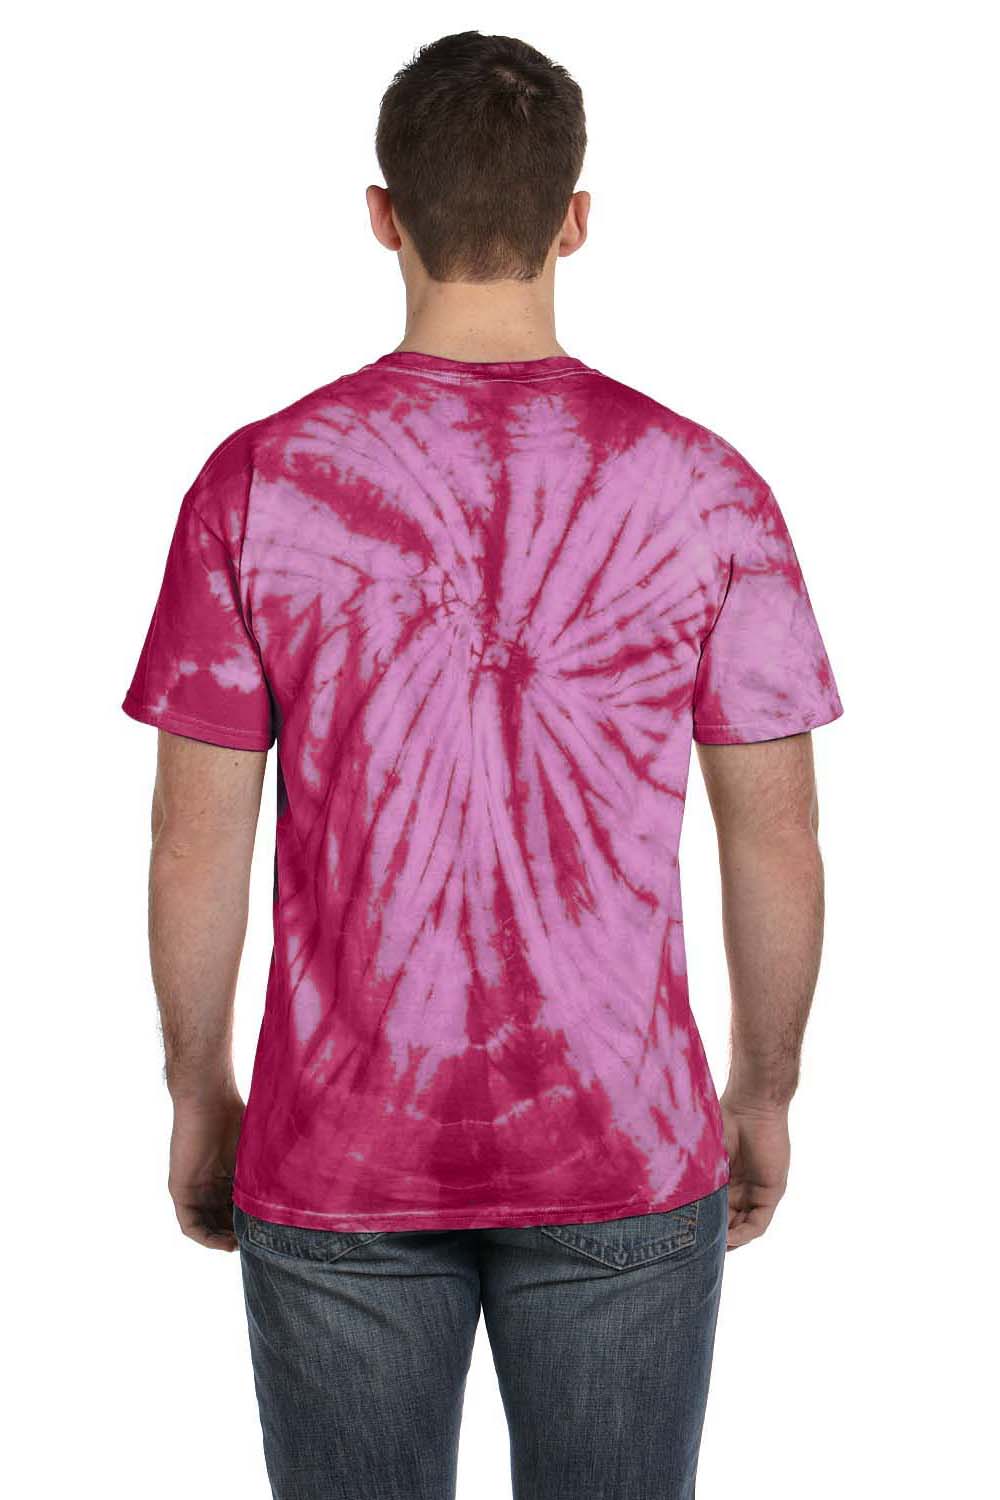 Tie-Dye CD101 Mens Short Sleeve Crewneck T-Shirt Pink Back